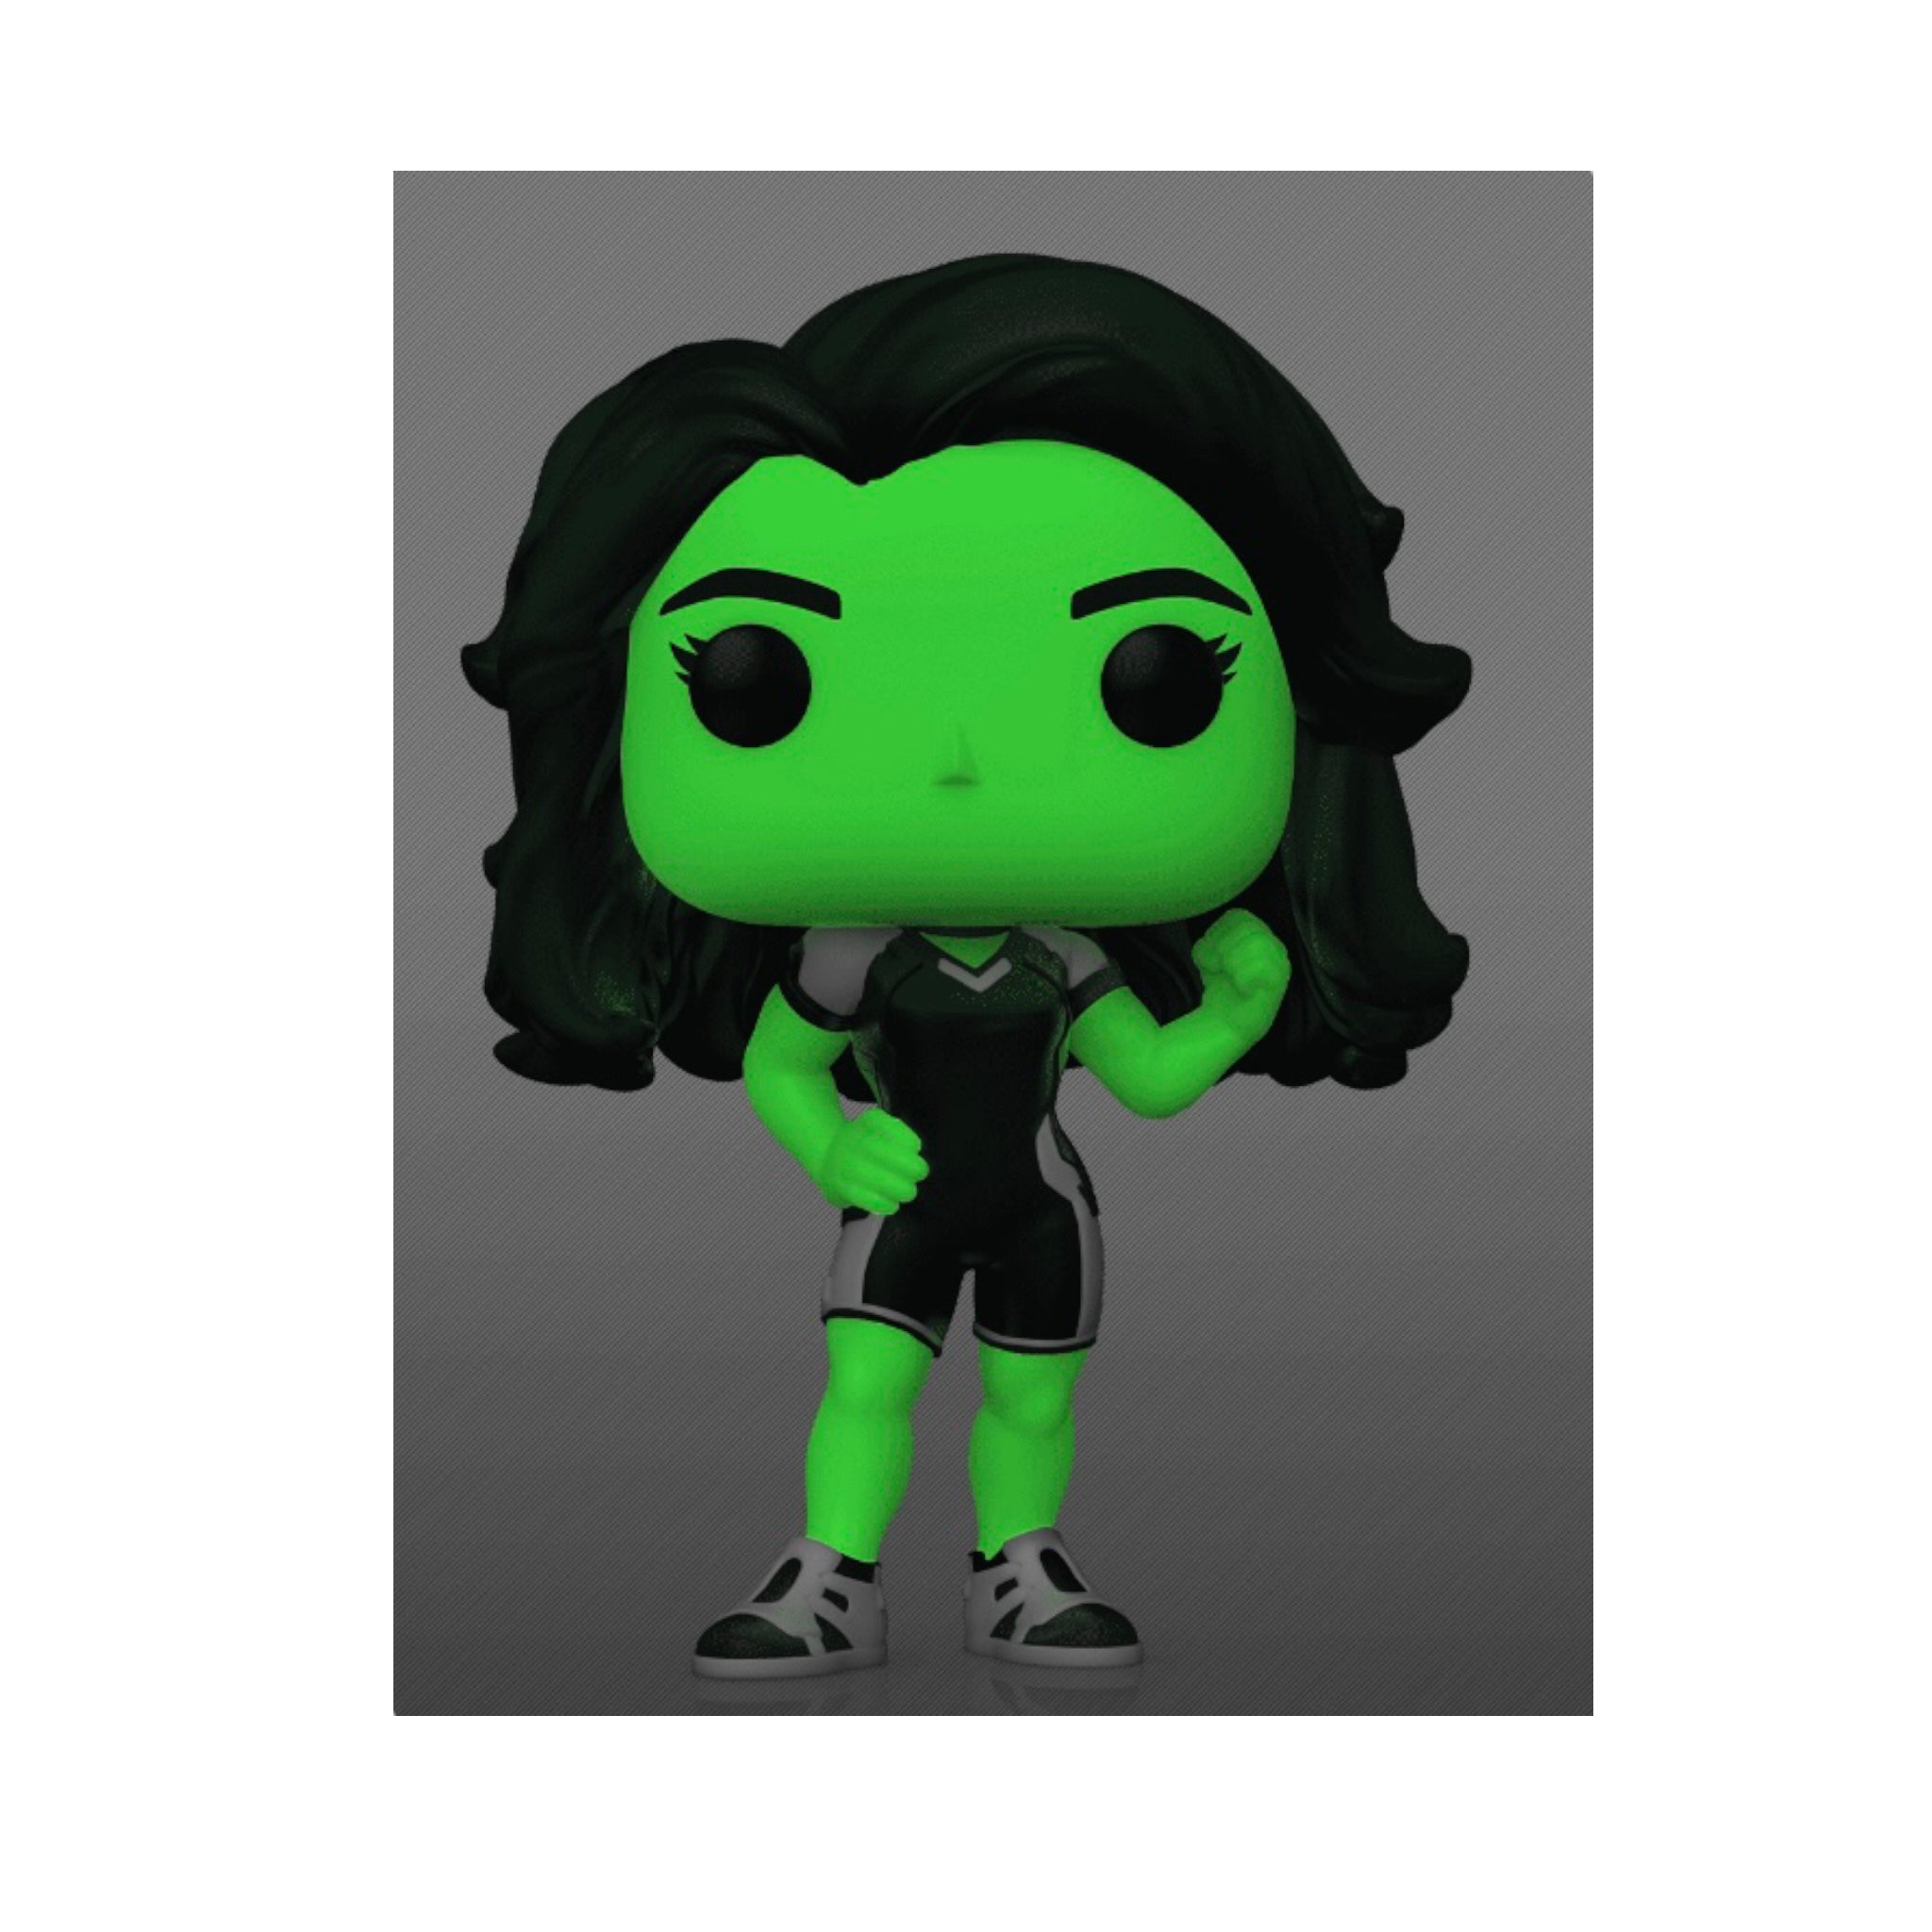 She-Hulk #1126 (Glows in the Dark) Funko Pop! - She-Hulk: Attorney at Law - Amazon Exclusive